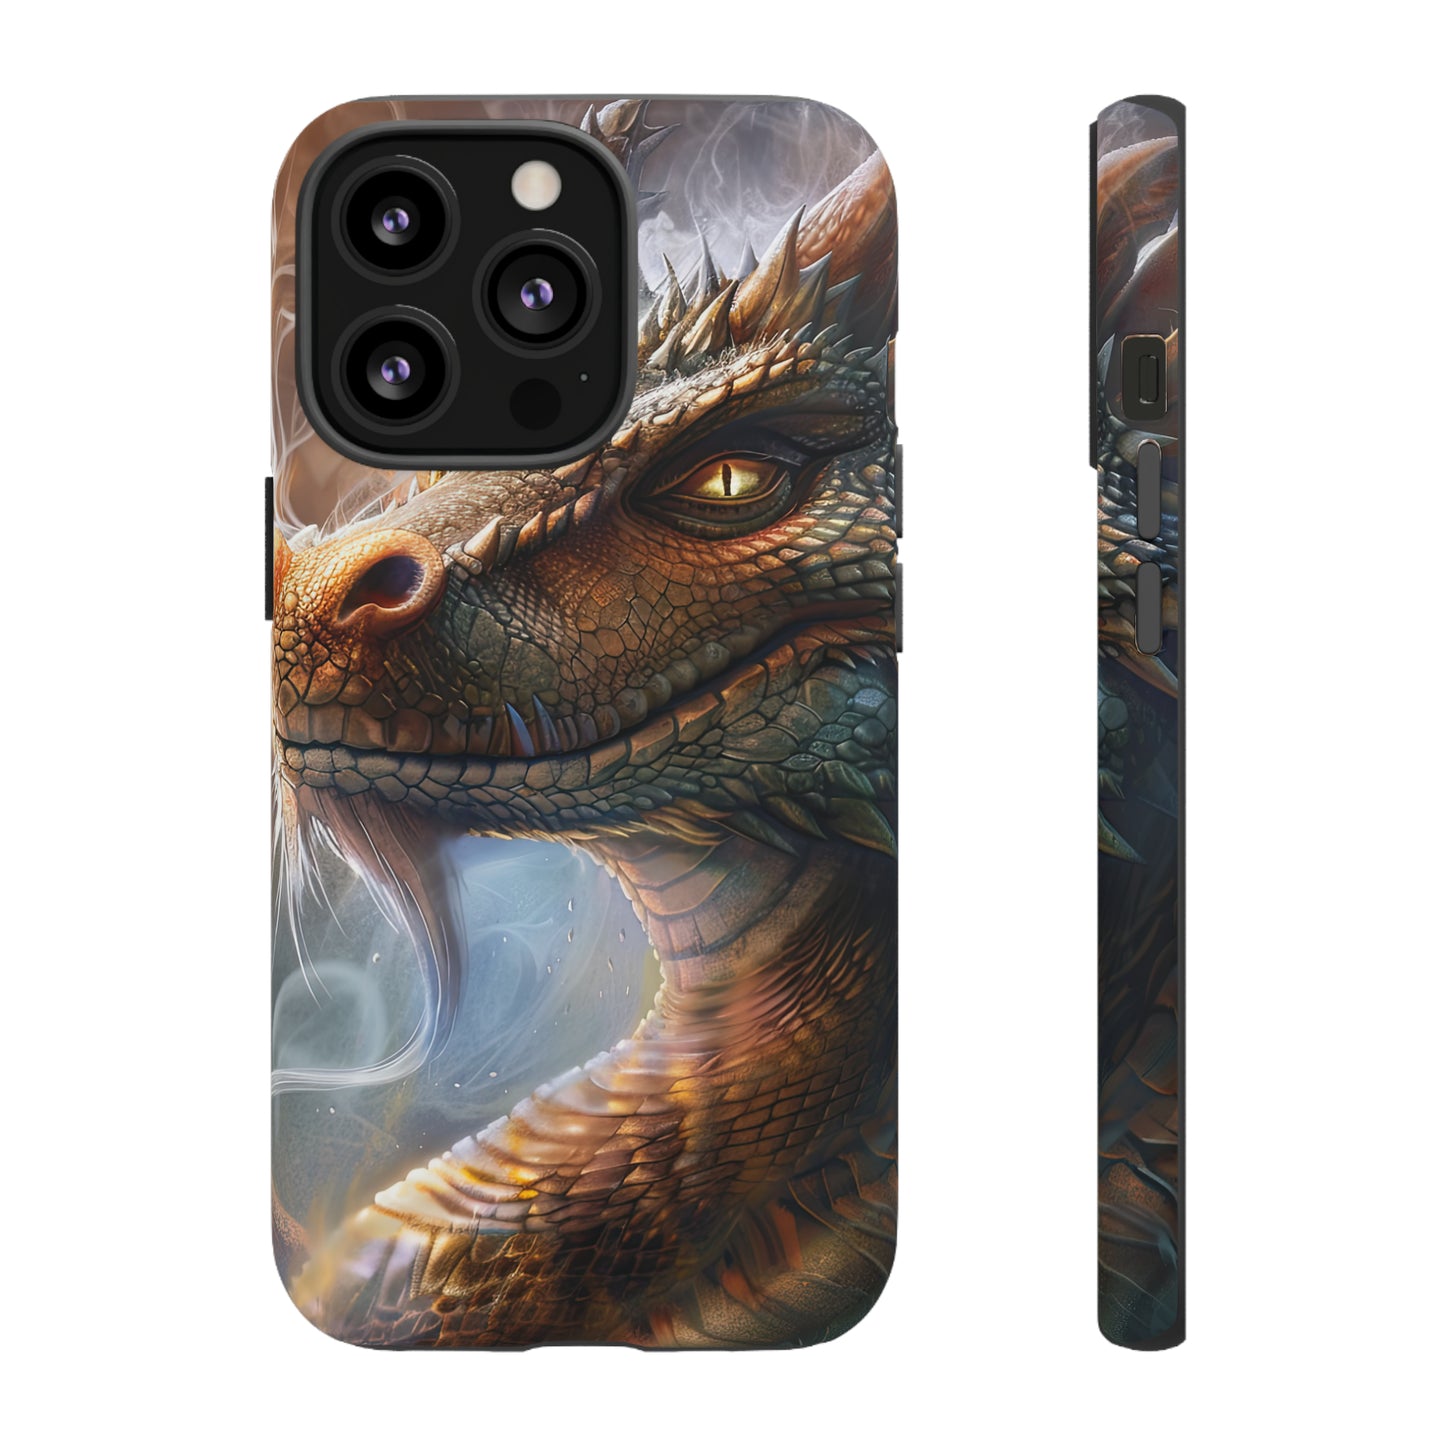 Tough Mobile Phone Cases: Smoking Dragon